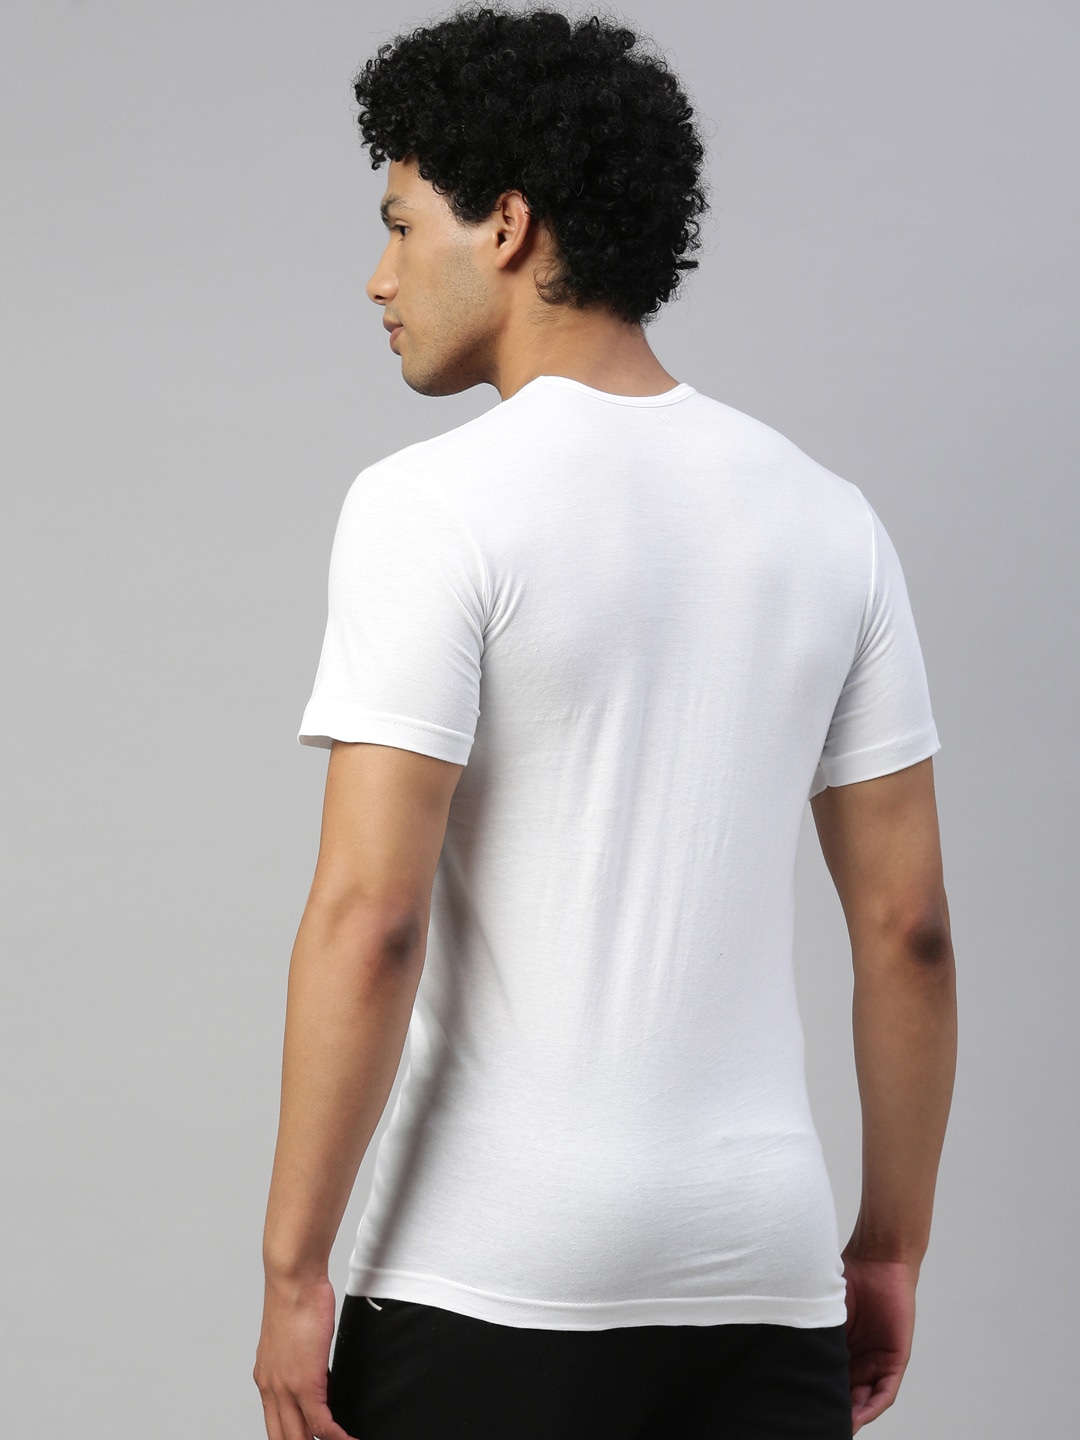 Clothing Innerwear Vests | DIXCY SCOTT MAXIMUS Men Pack Of 2 White Solid Pure Cotton Innerwear Gym Vests MAXV-003-GLIDE VEST-P2 - OT56511